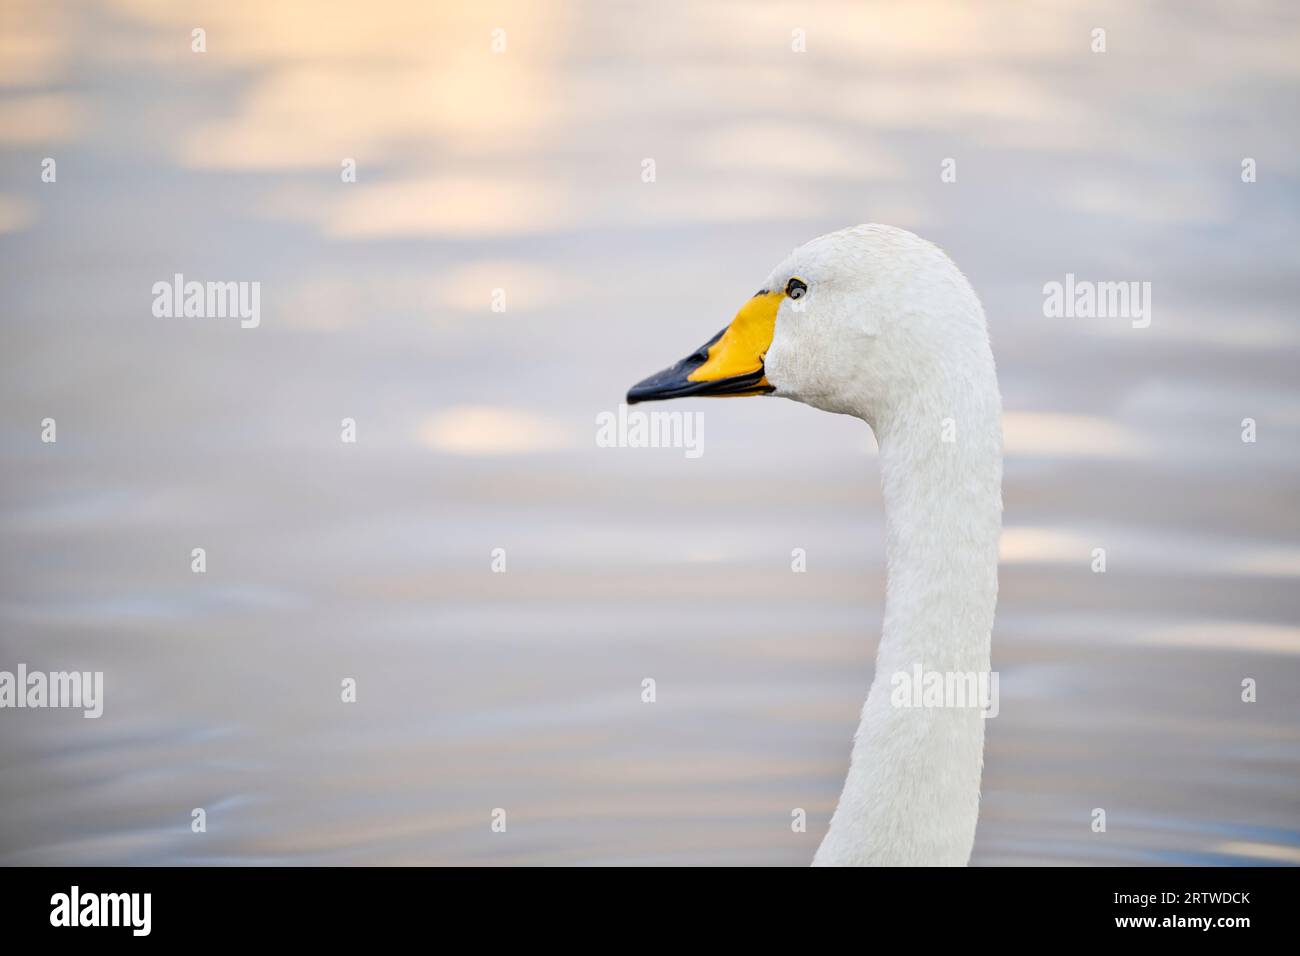 White swan swimming on lake shore Stock Photo